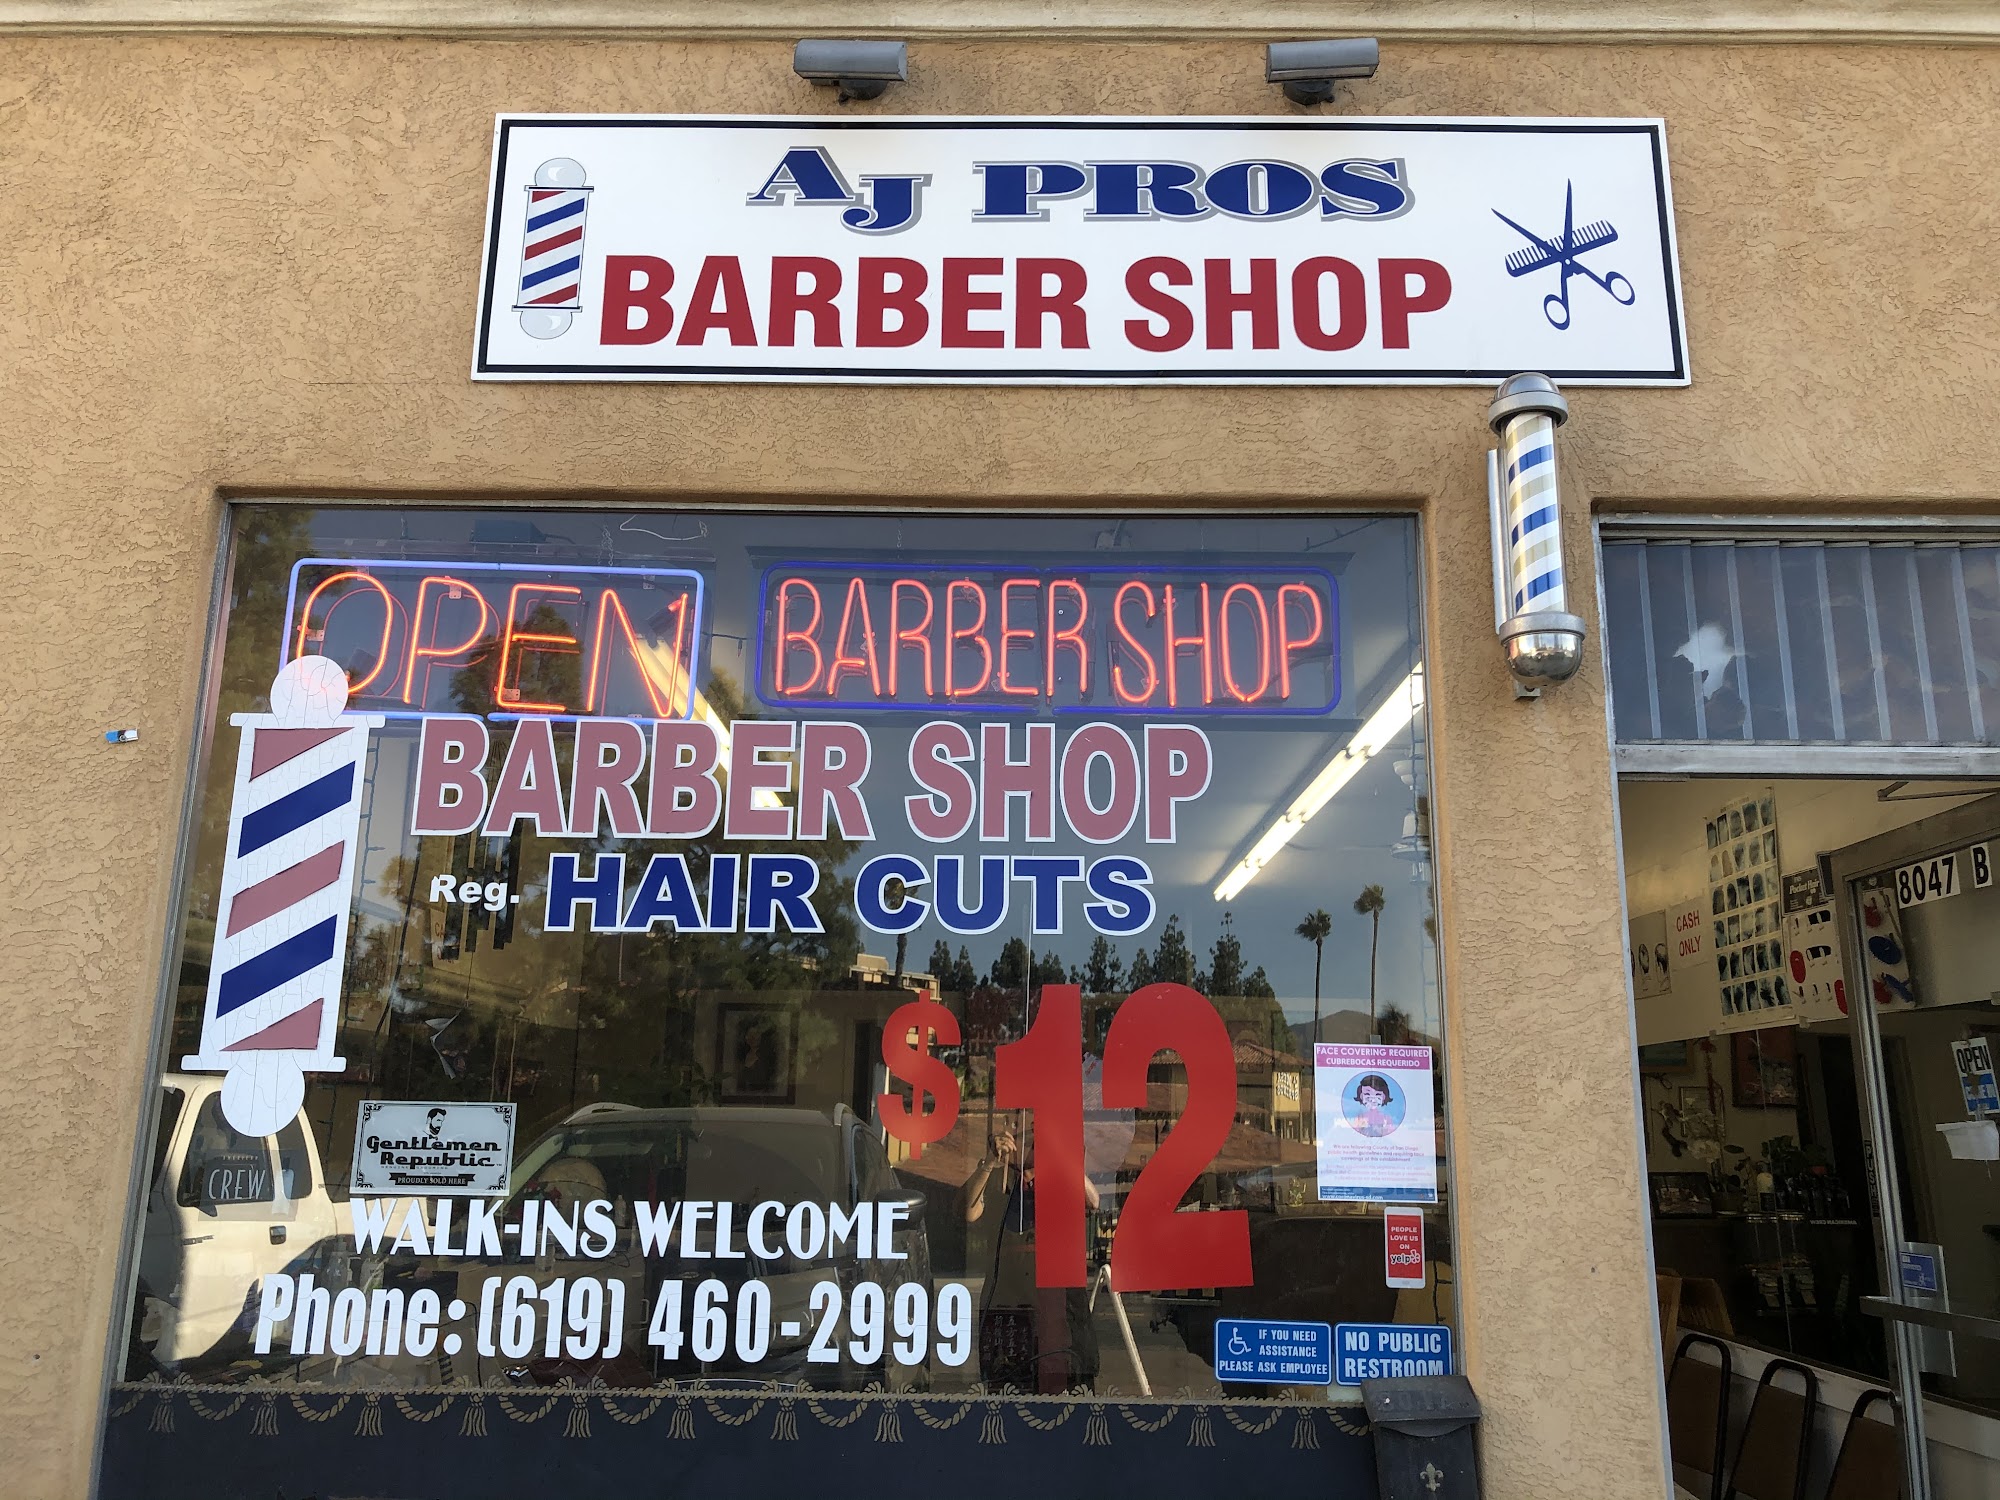 A J Pros Barber Shop